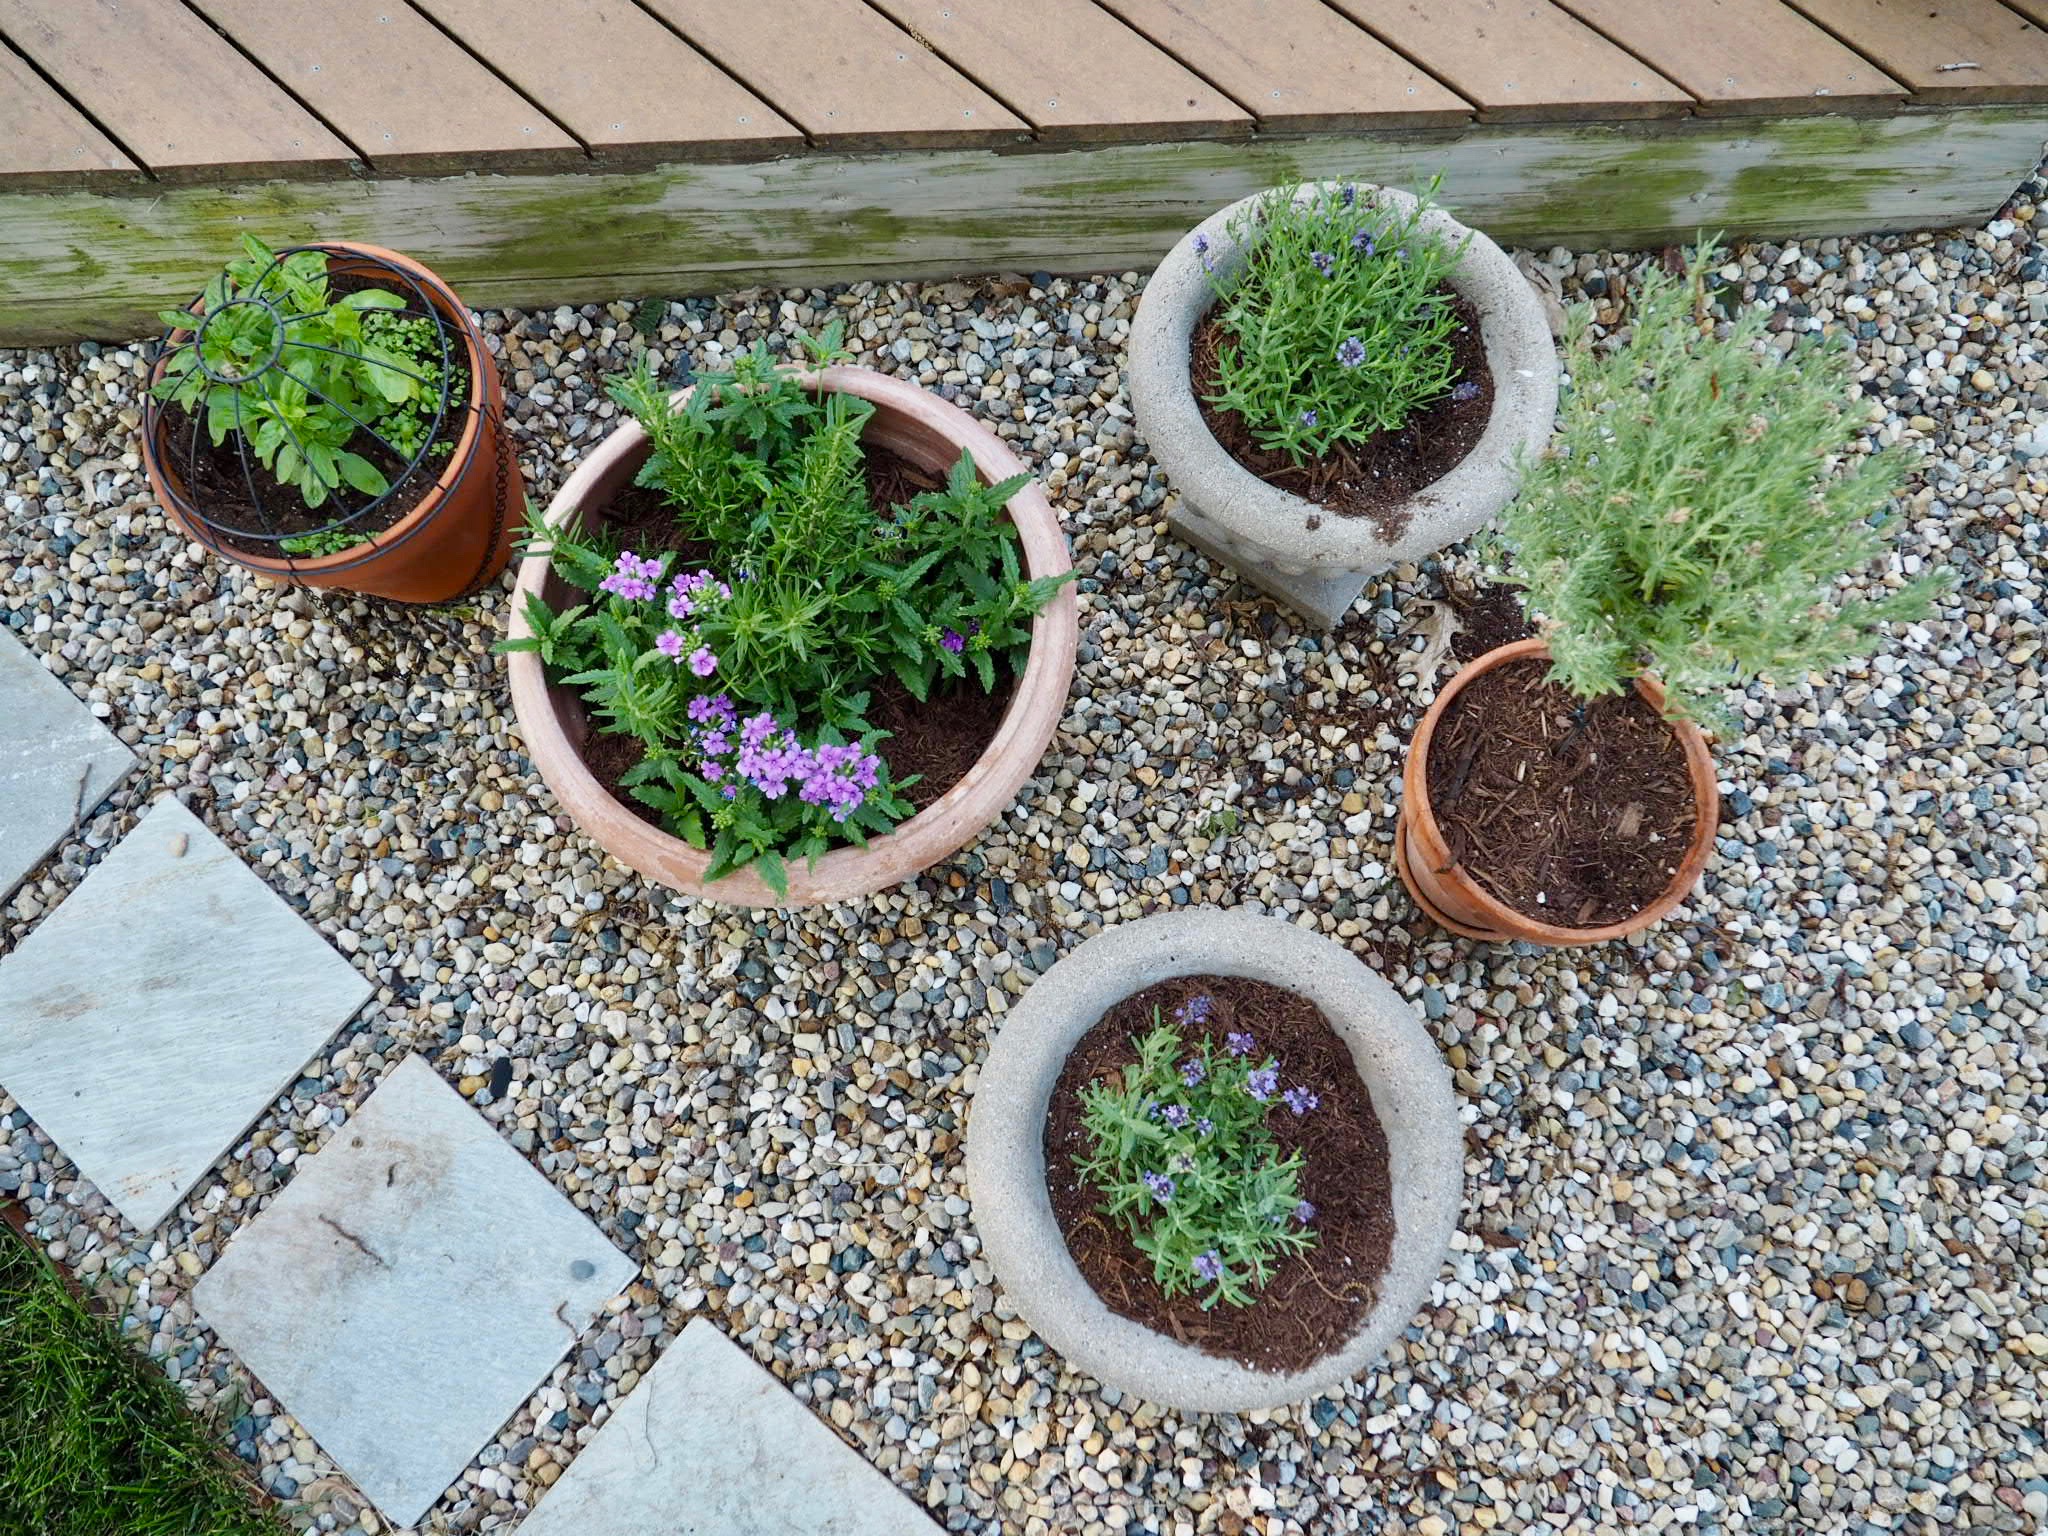 Basil, rosemary, lavender and verbena